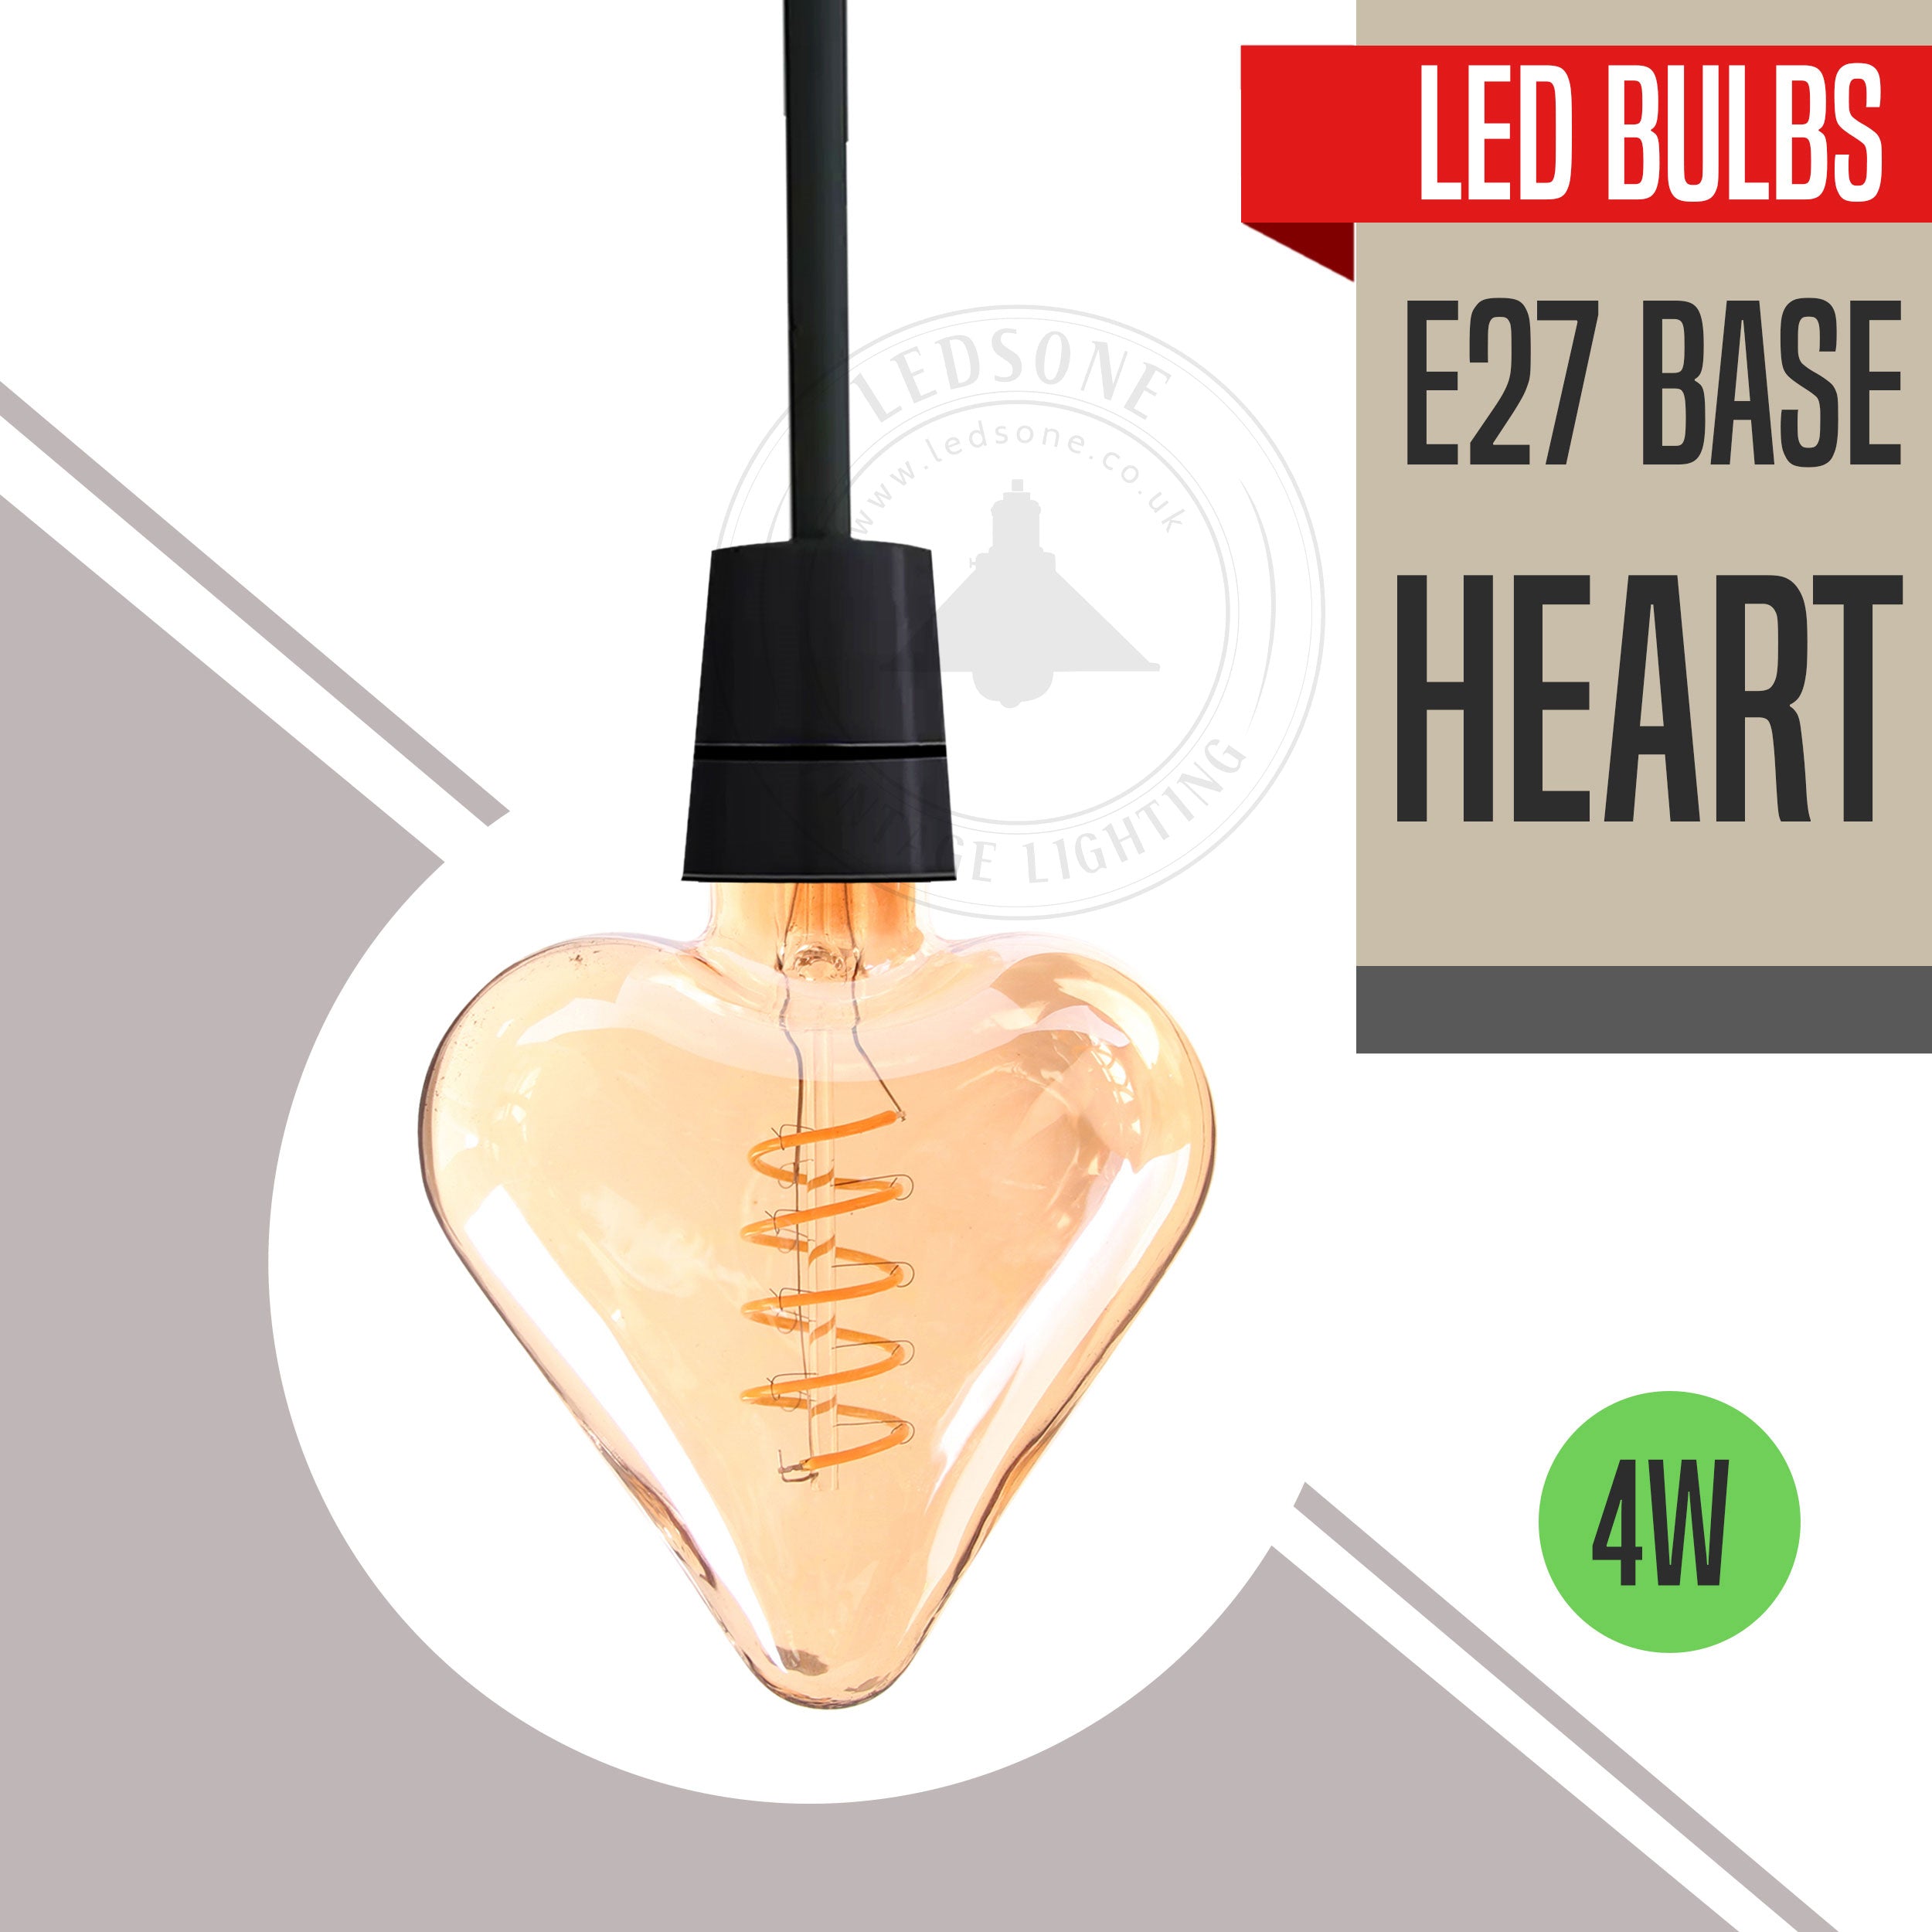 Vintage Retro style E27 Edison Screw Amber Glass light Bulbs , Warm White Colour Indoor decorative Lamp